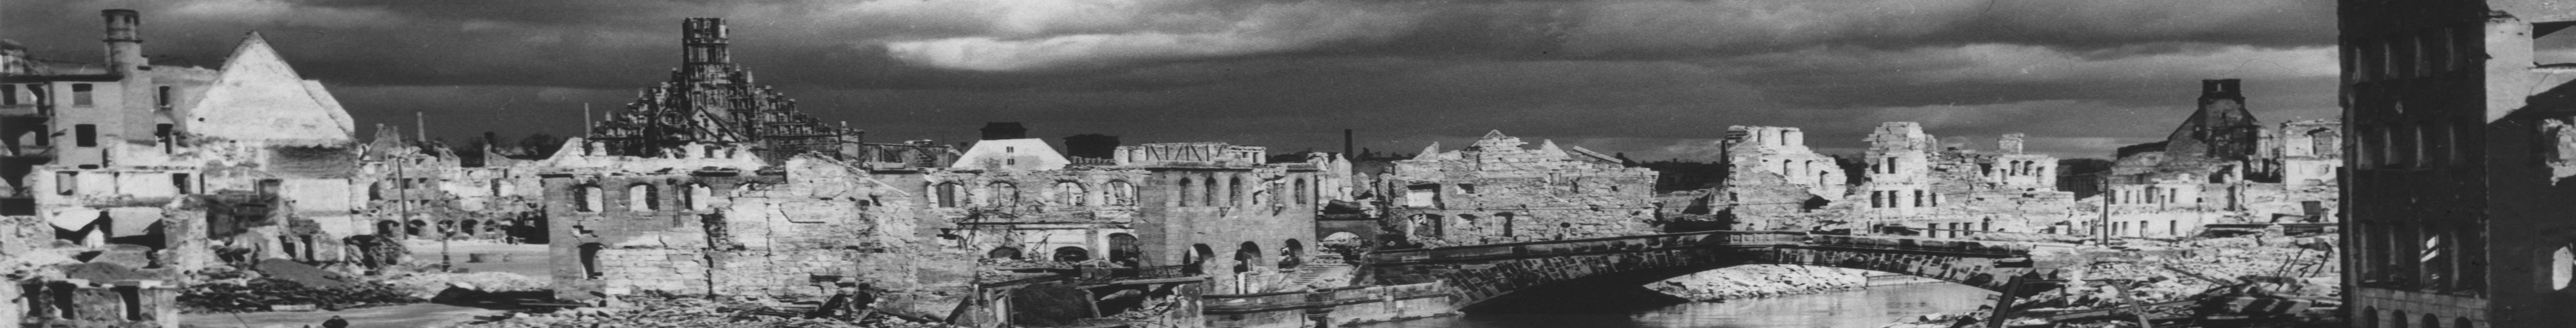 2 khaldei yevgeny nuremberg ruins 1945-8957.jpg